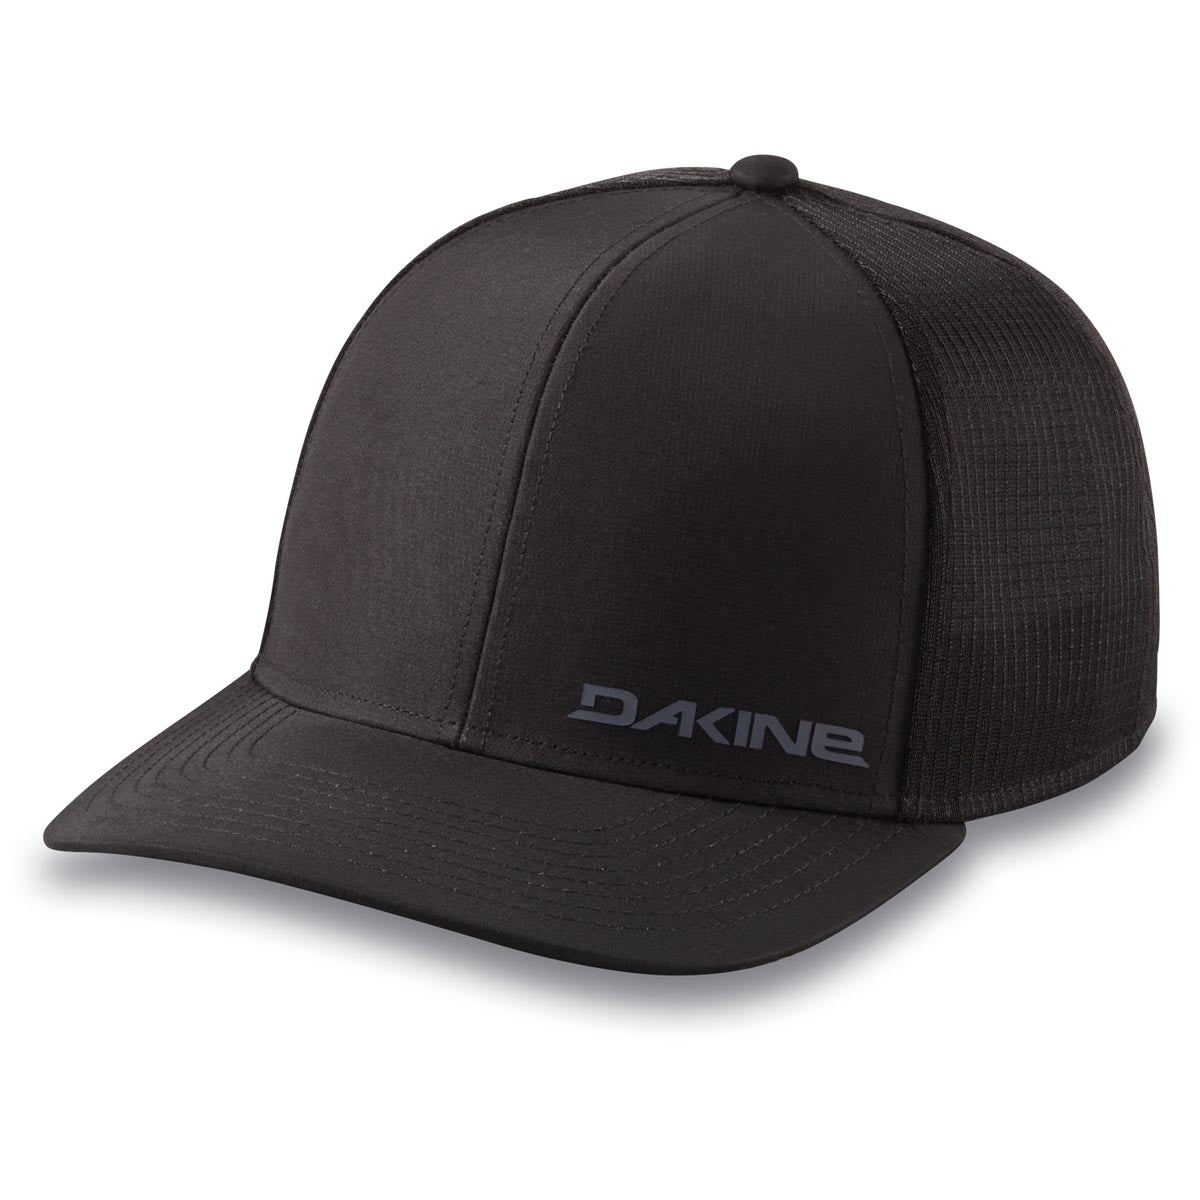 Dakine Core Badge Ball Hat - Black image 1